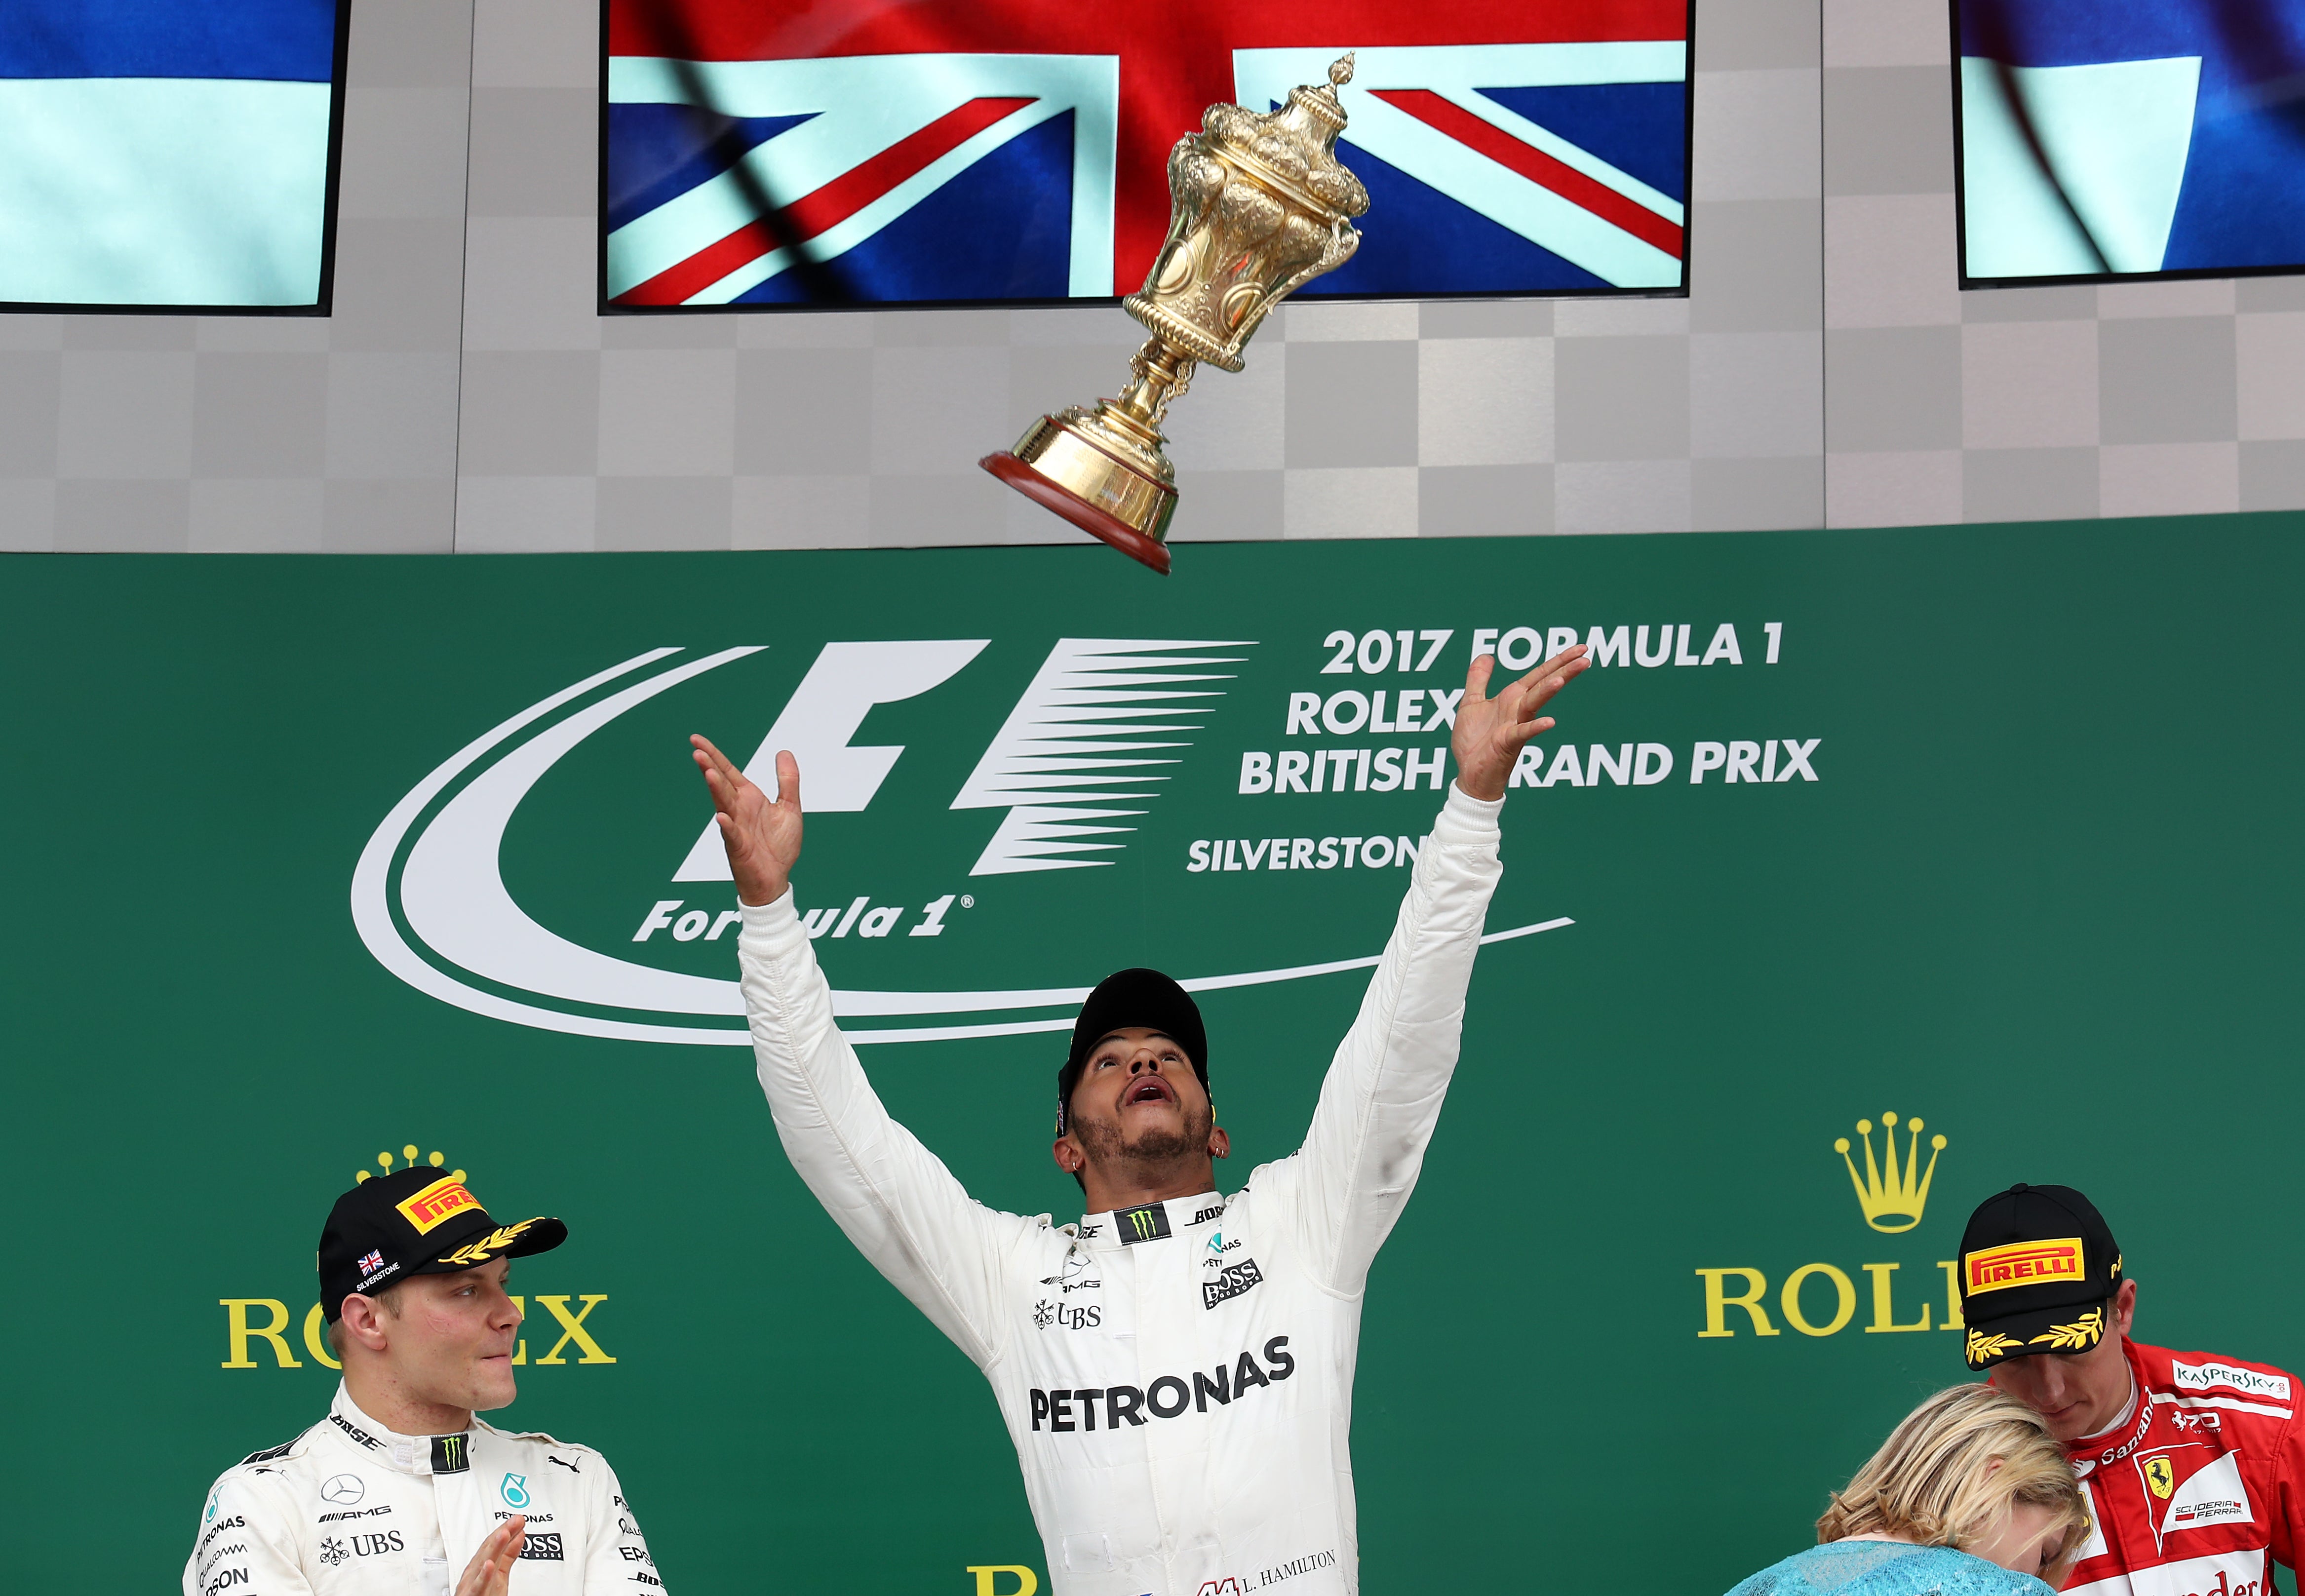 Lewis Hamilton (centre) celebrates his victory on the podium in 2017